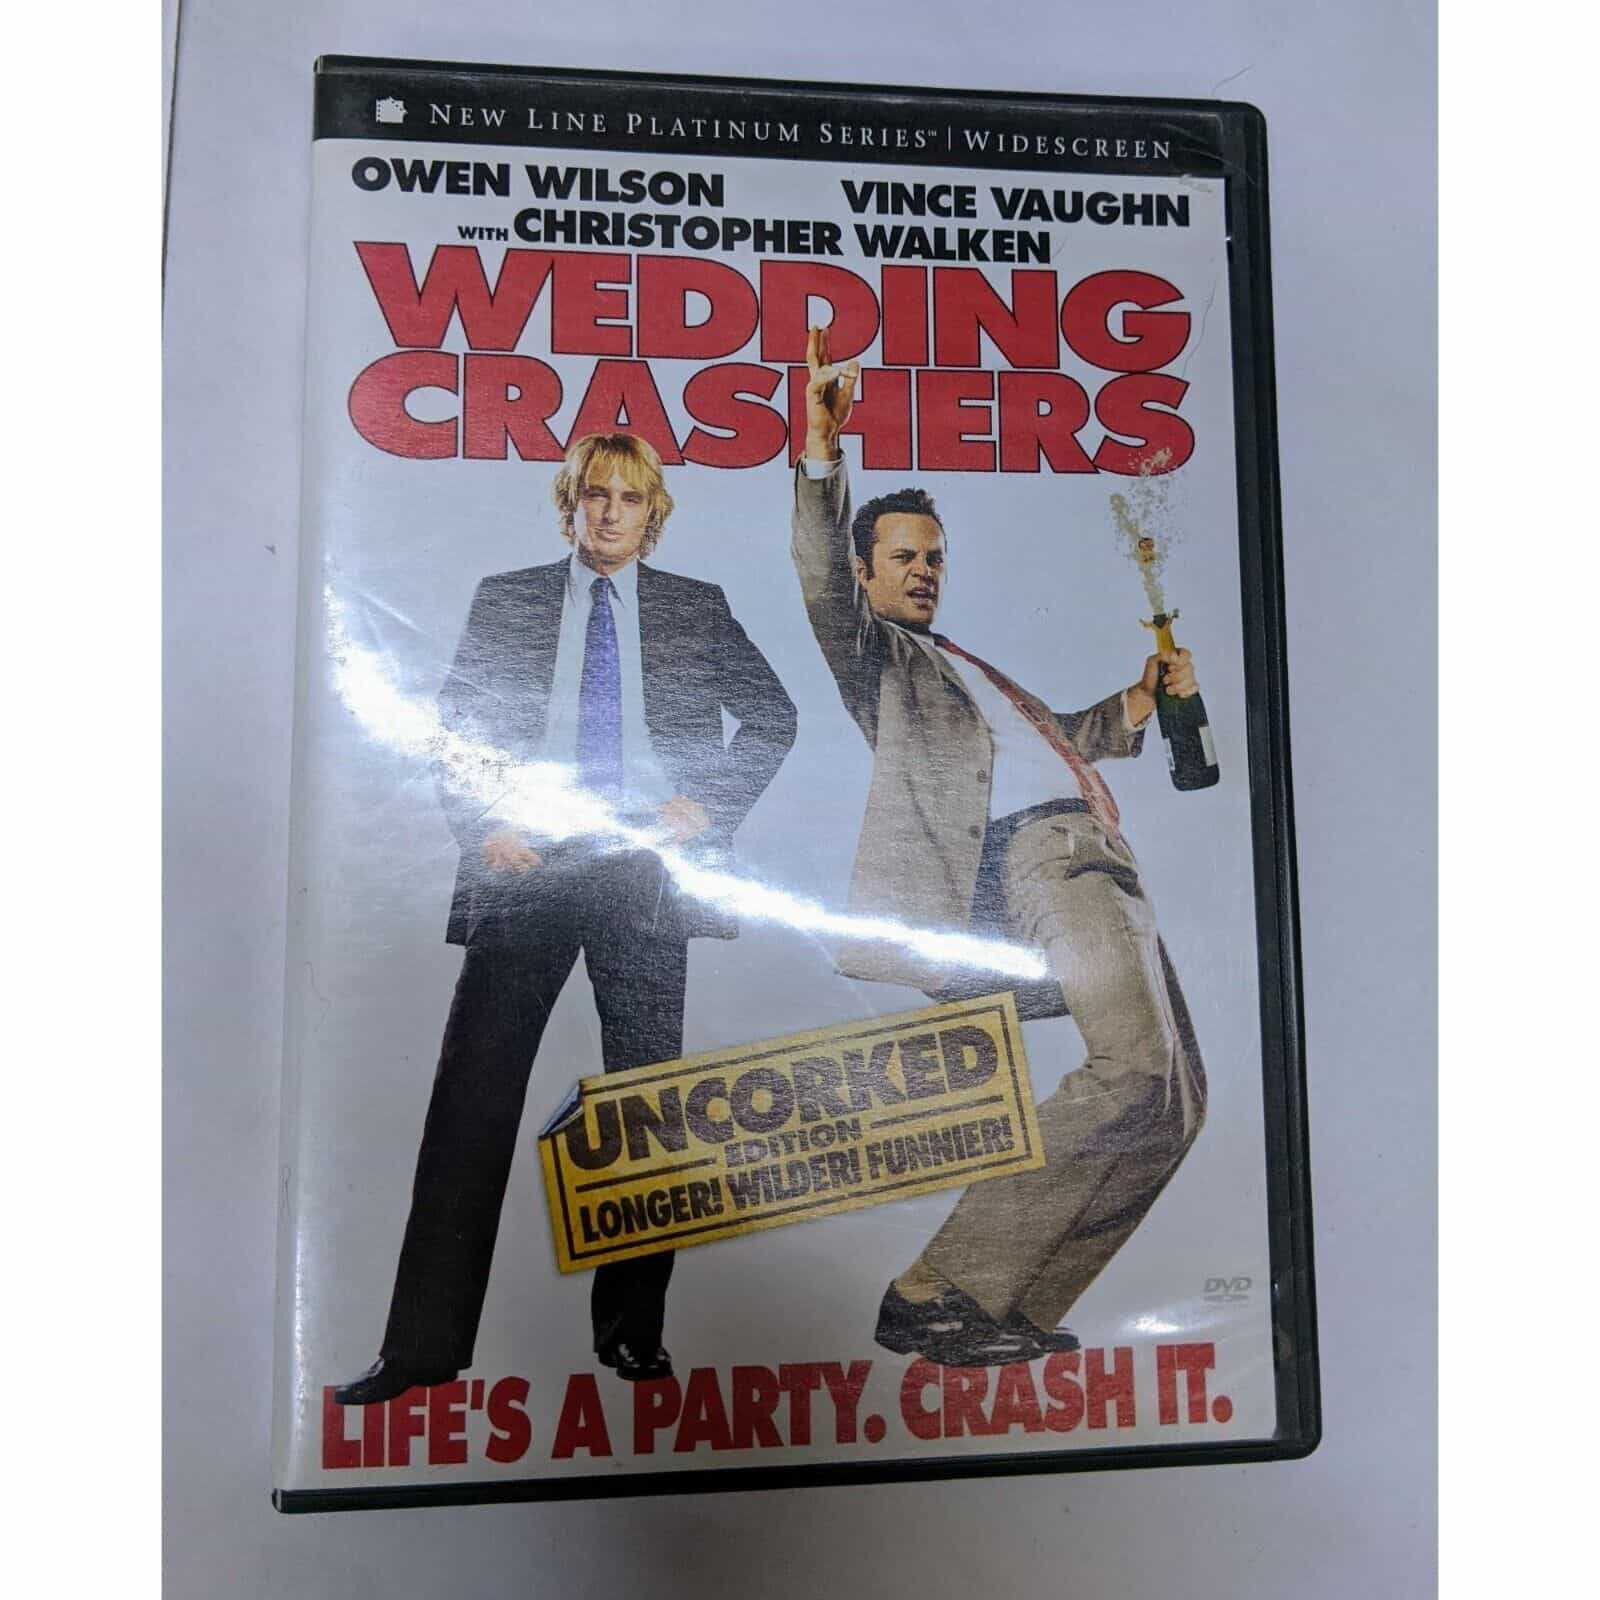 Wedding Crashers DVD Movie – Widescreen edition Uncorked Edition